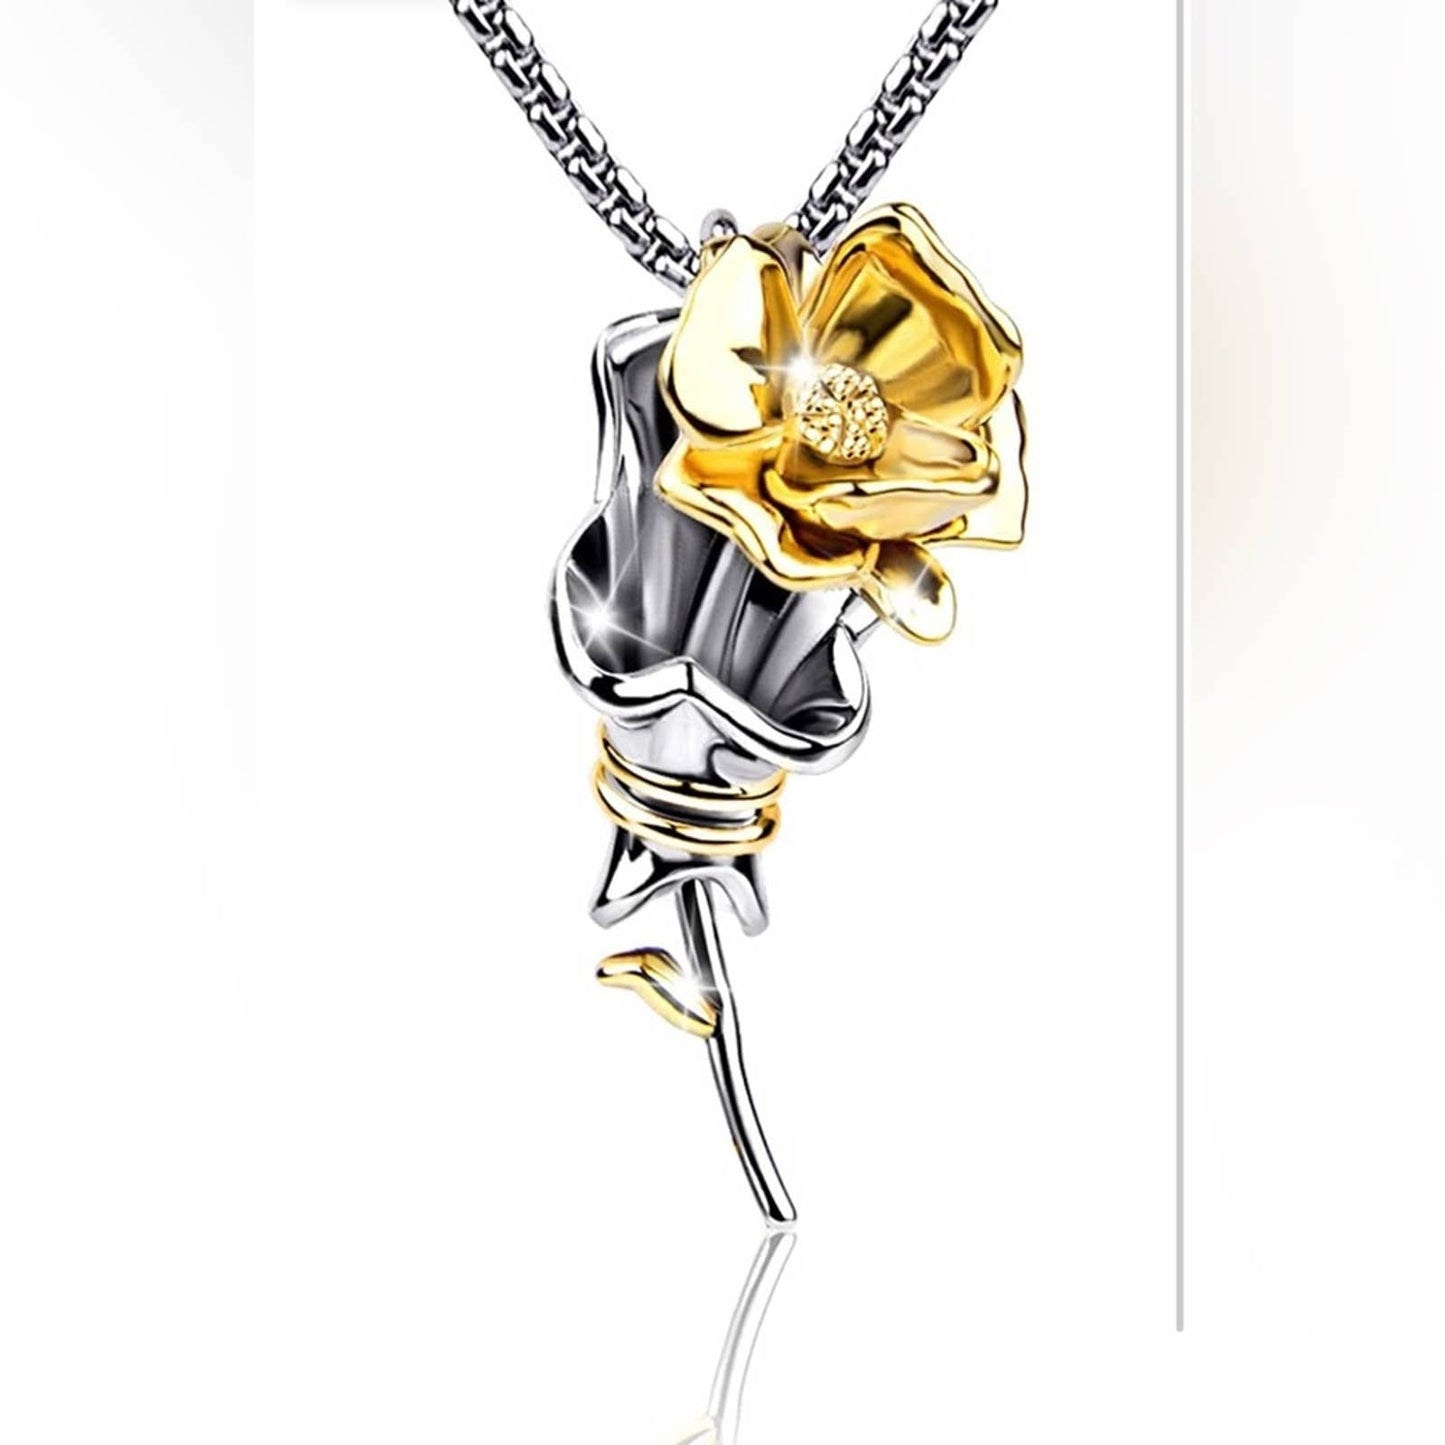 Bengnkes BG Four Leaf Clover Necklace for Women, 18K Gold Plated Pendant Necklac